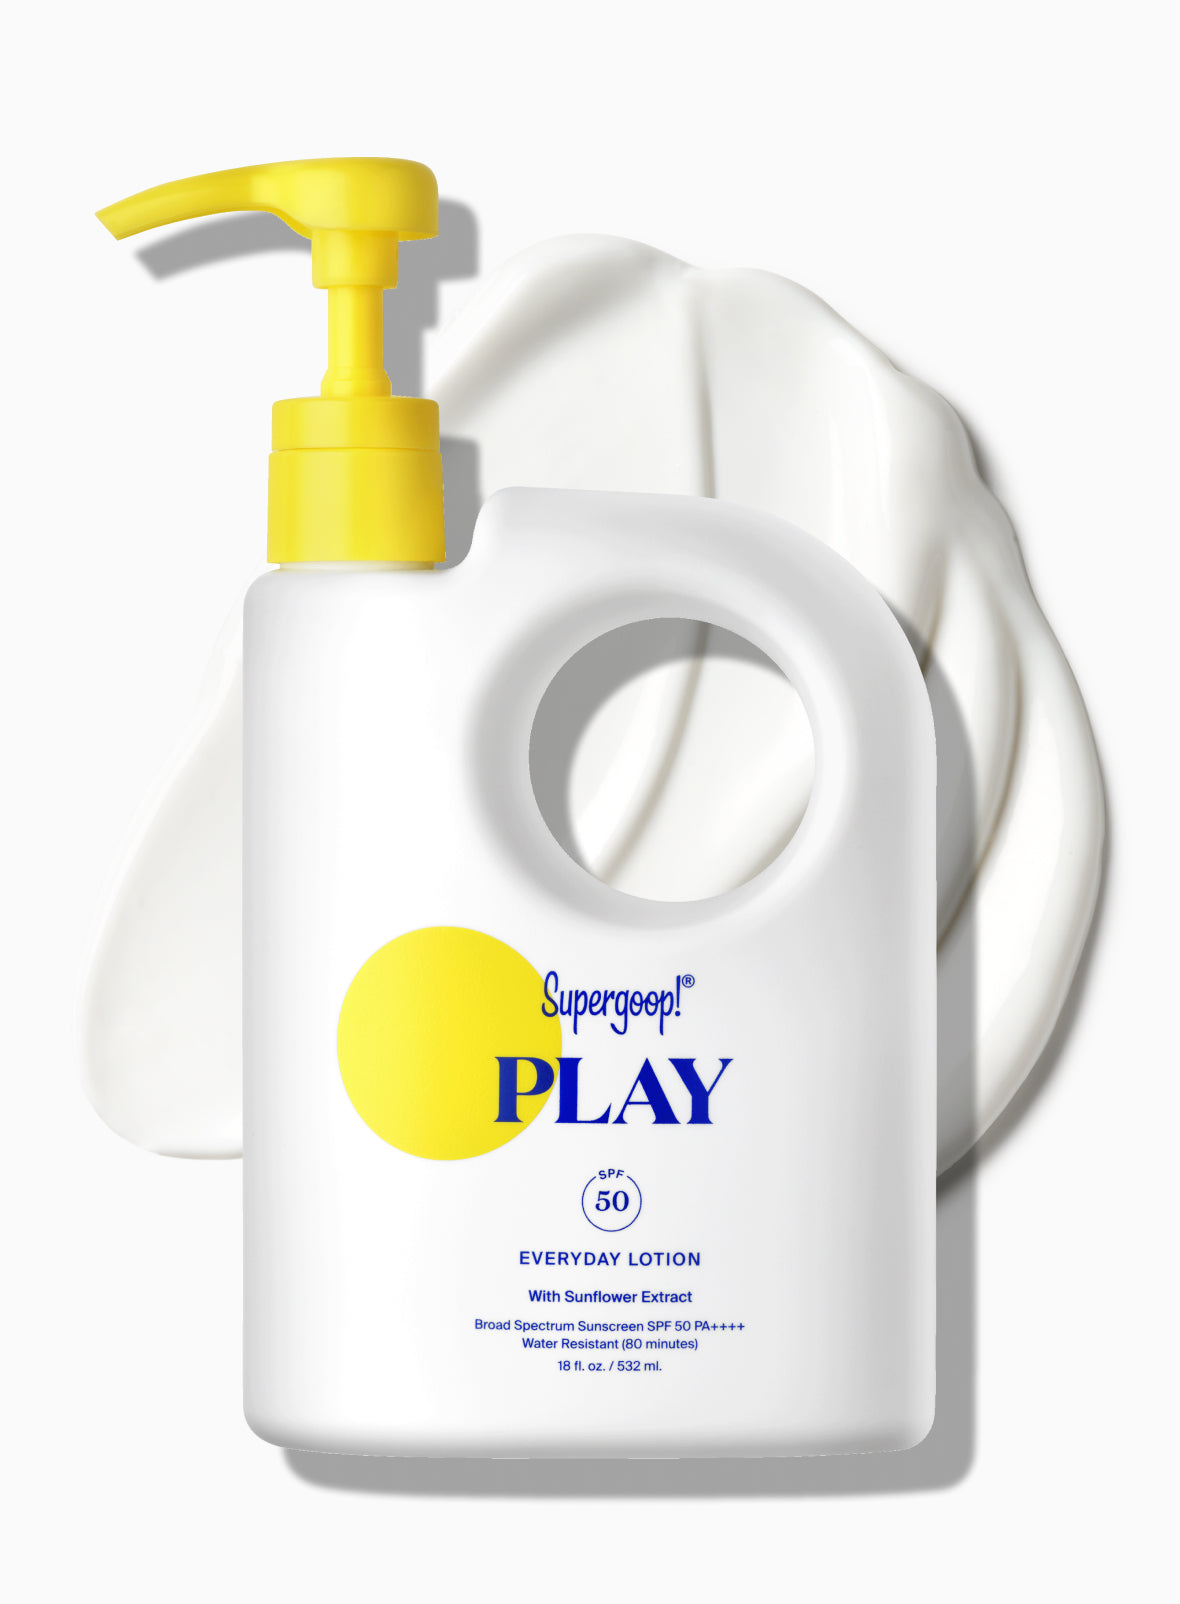 PLAY Everyday Lotion SPF 50 Sunscreen 18 fl. oz. | Supergoop!